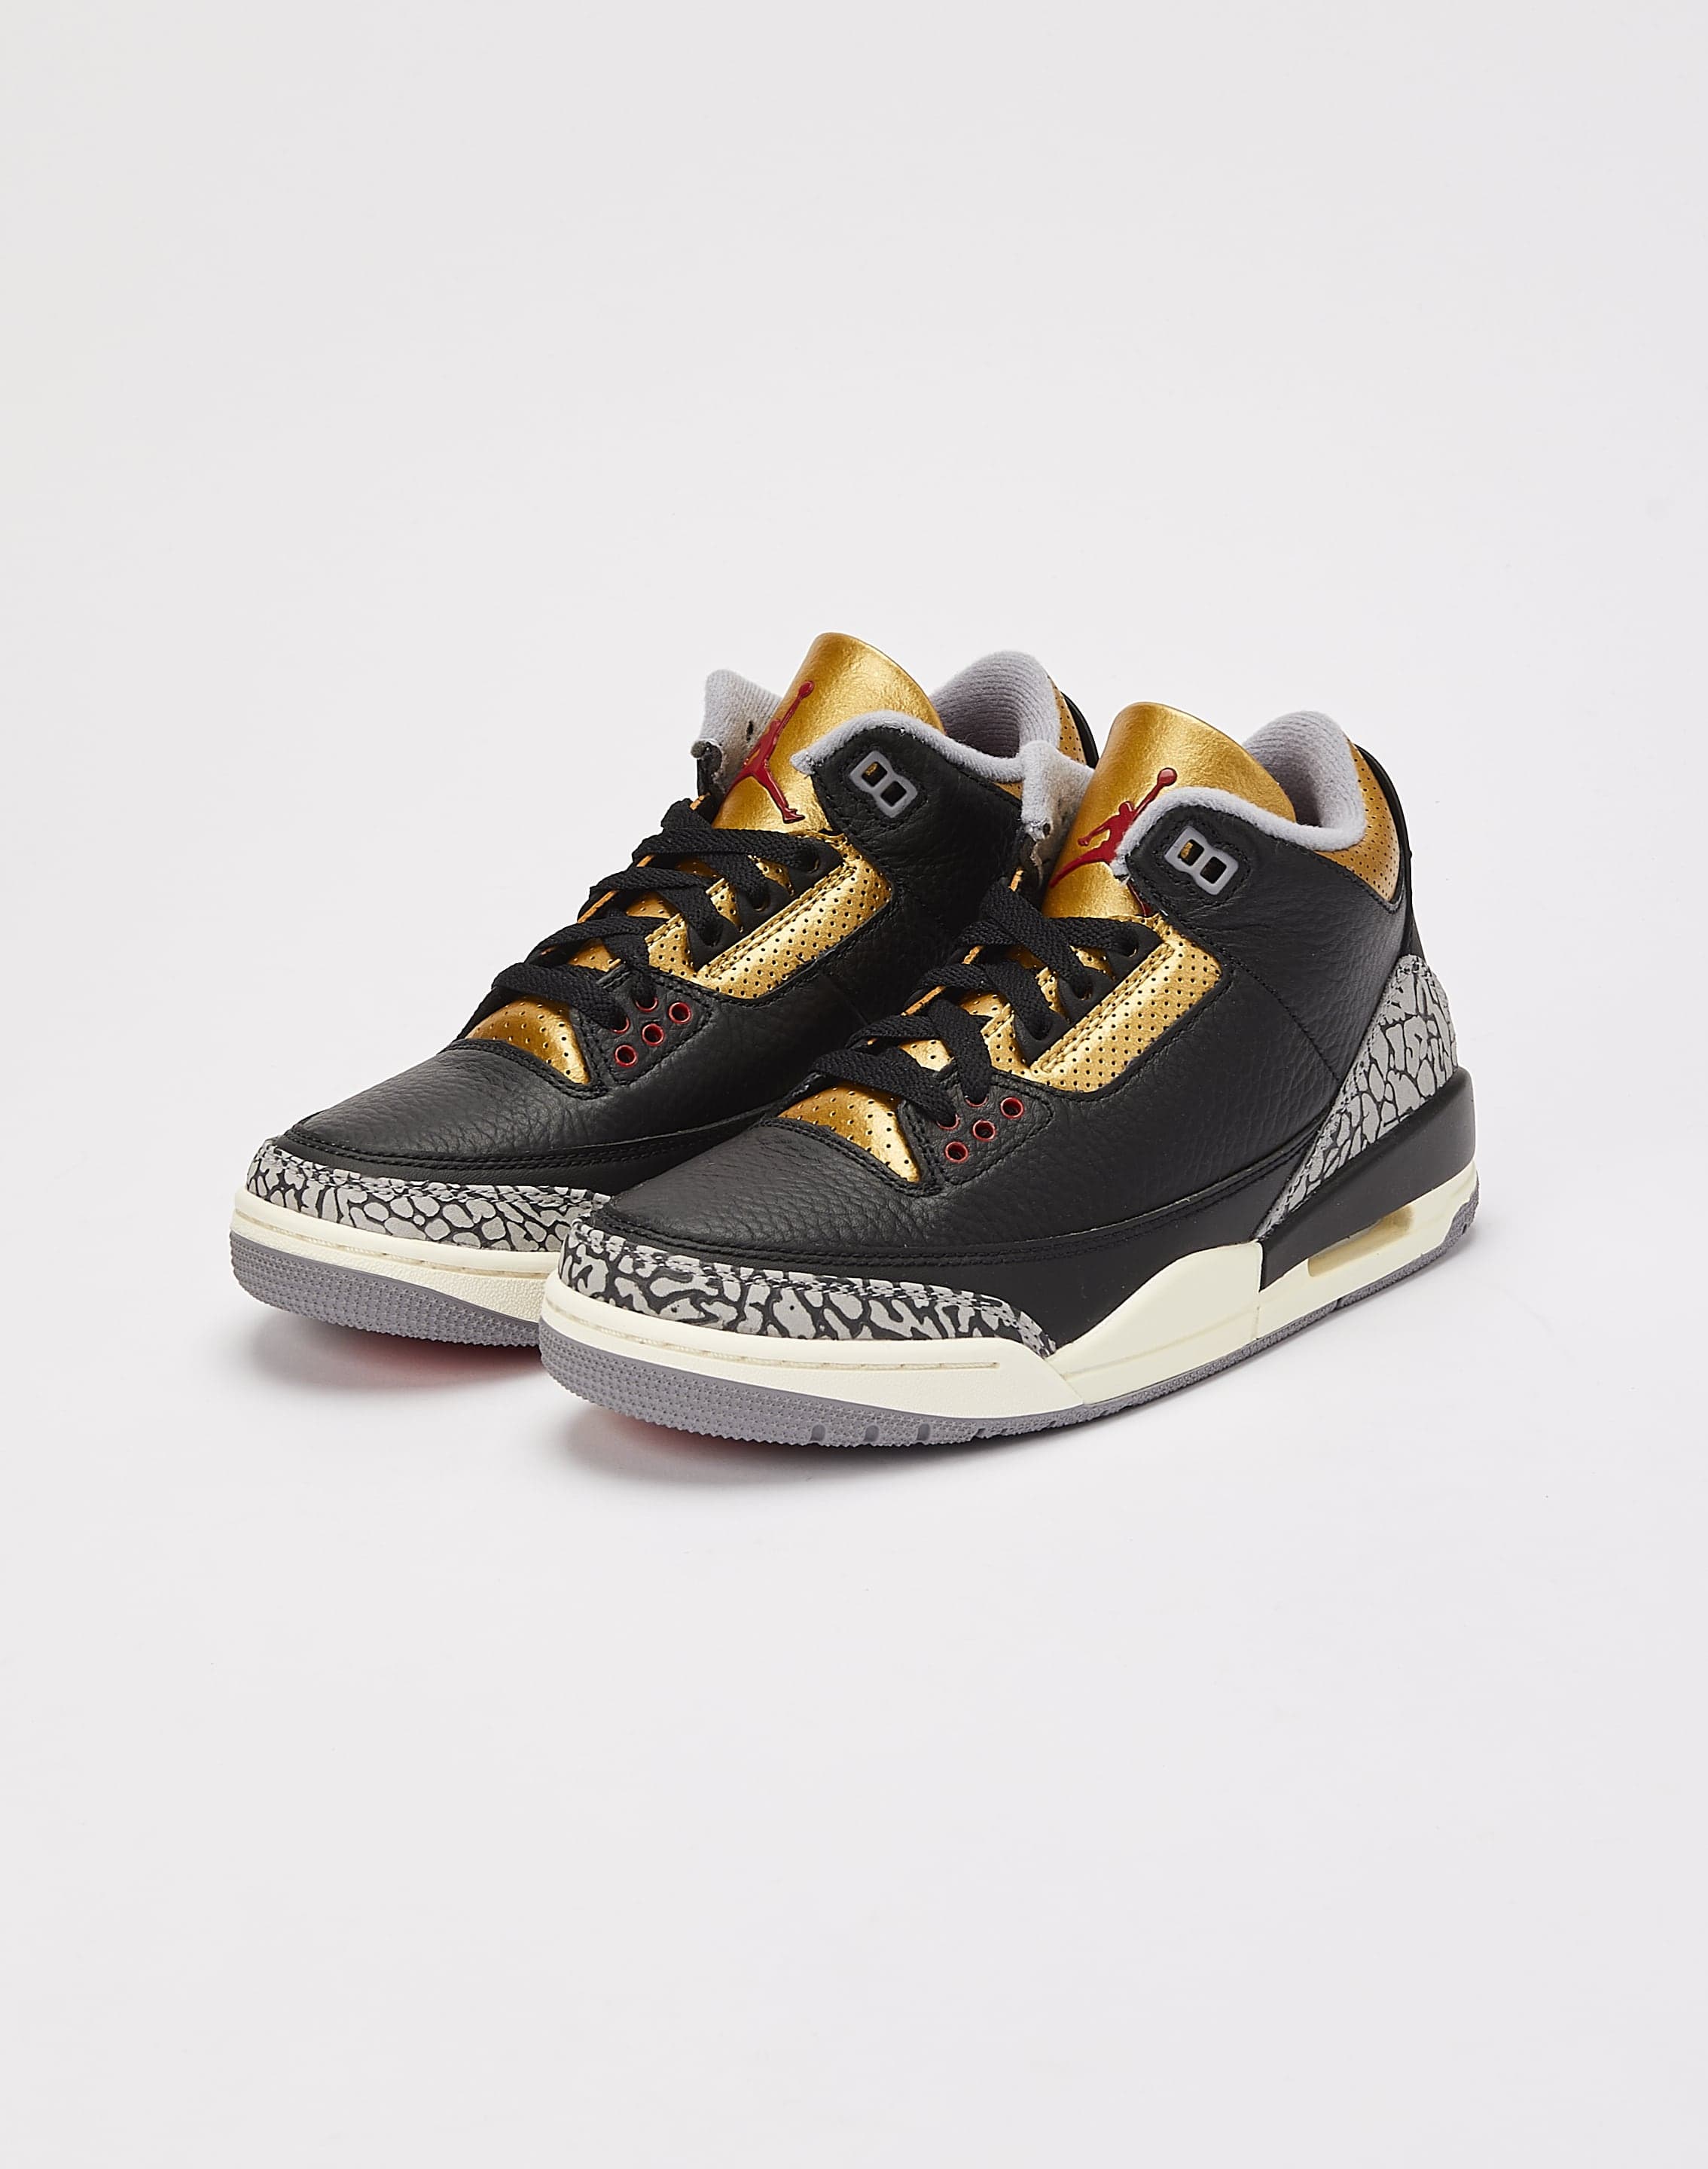 Jordan Air Jordan 3 Retro 'Black Cement Gold'